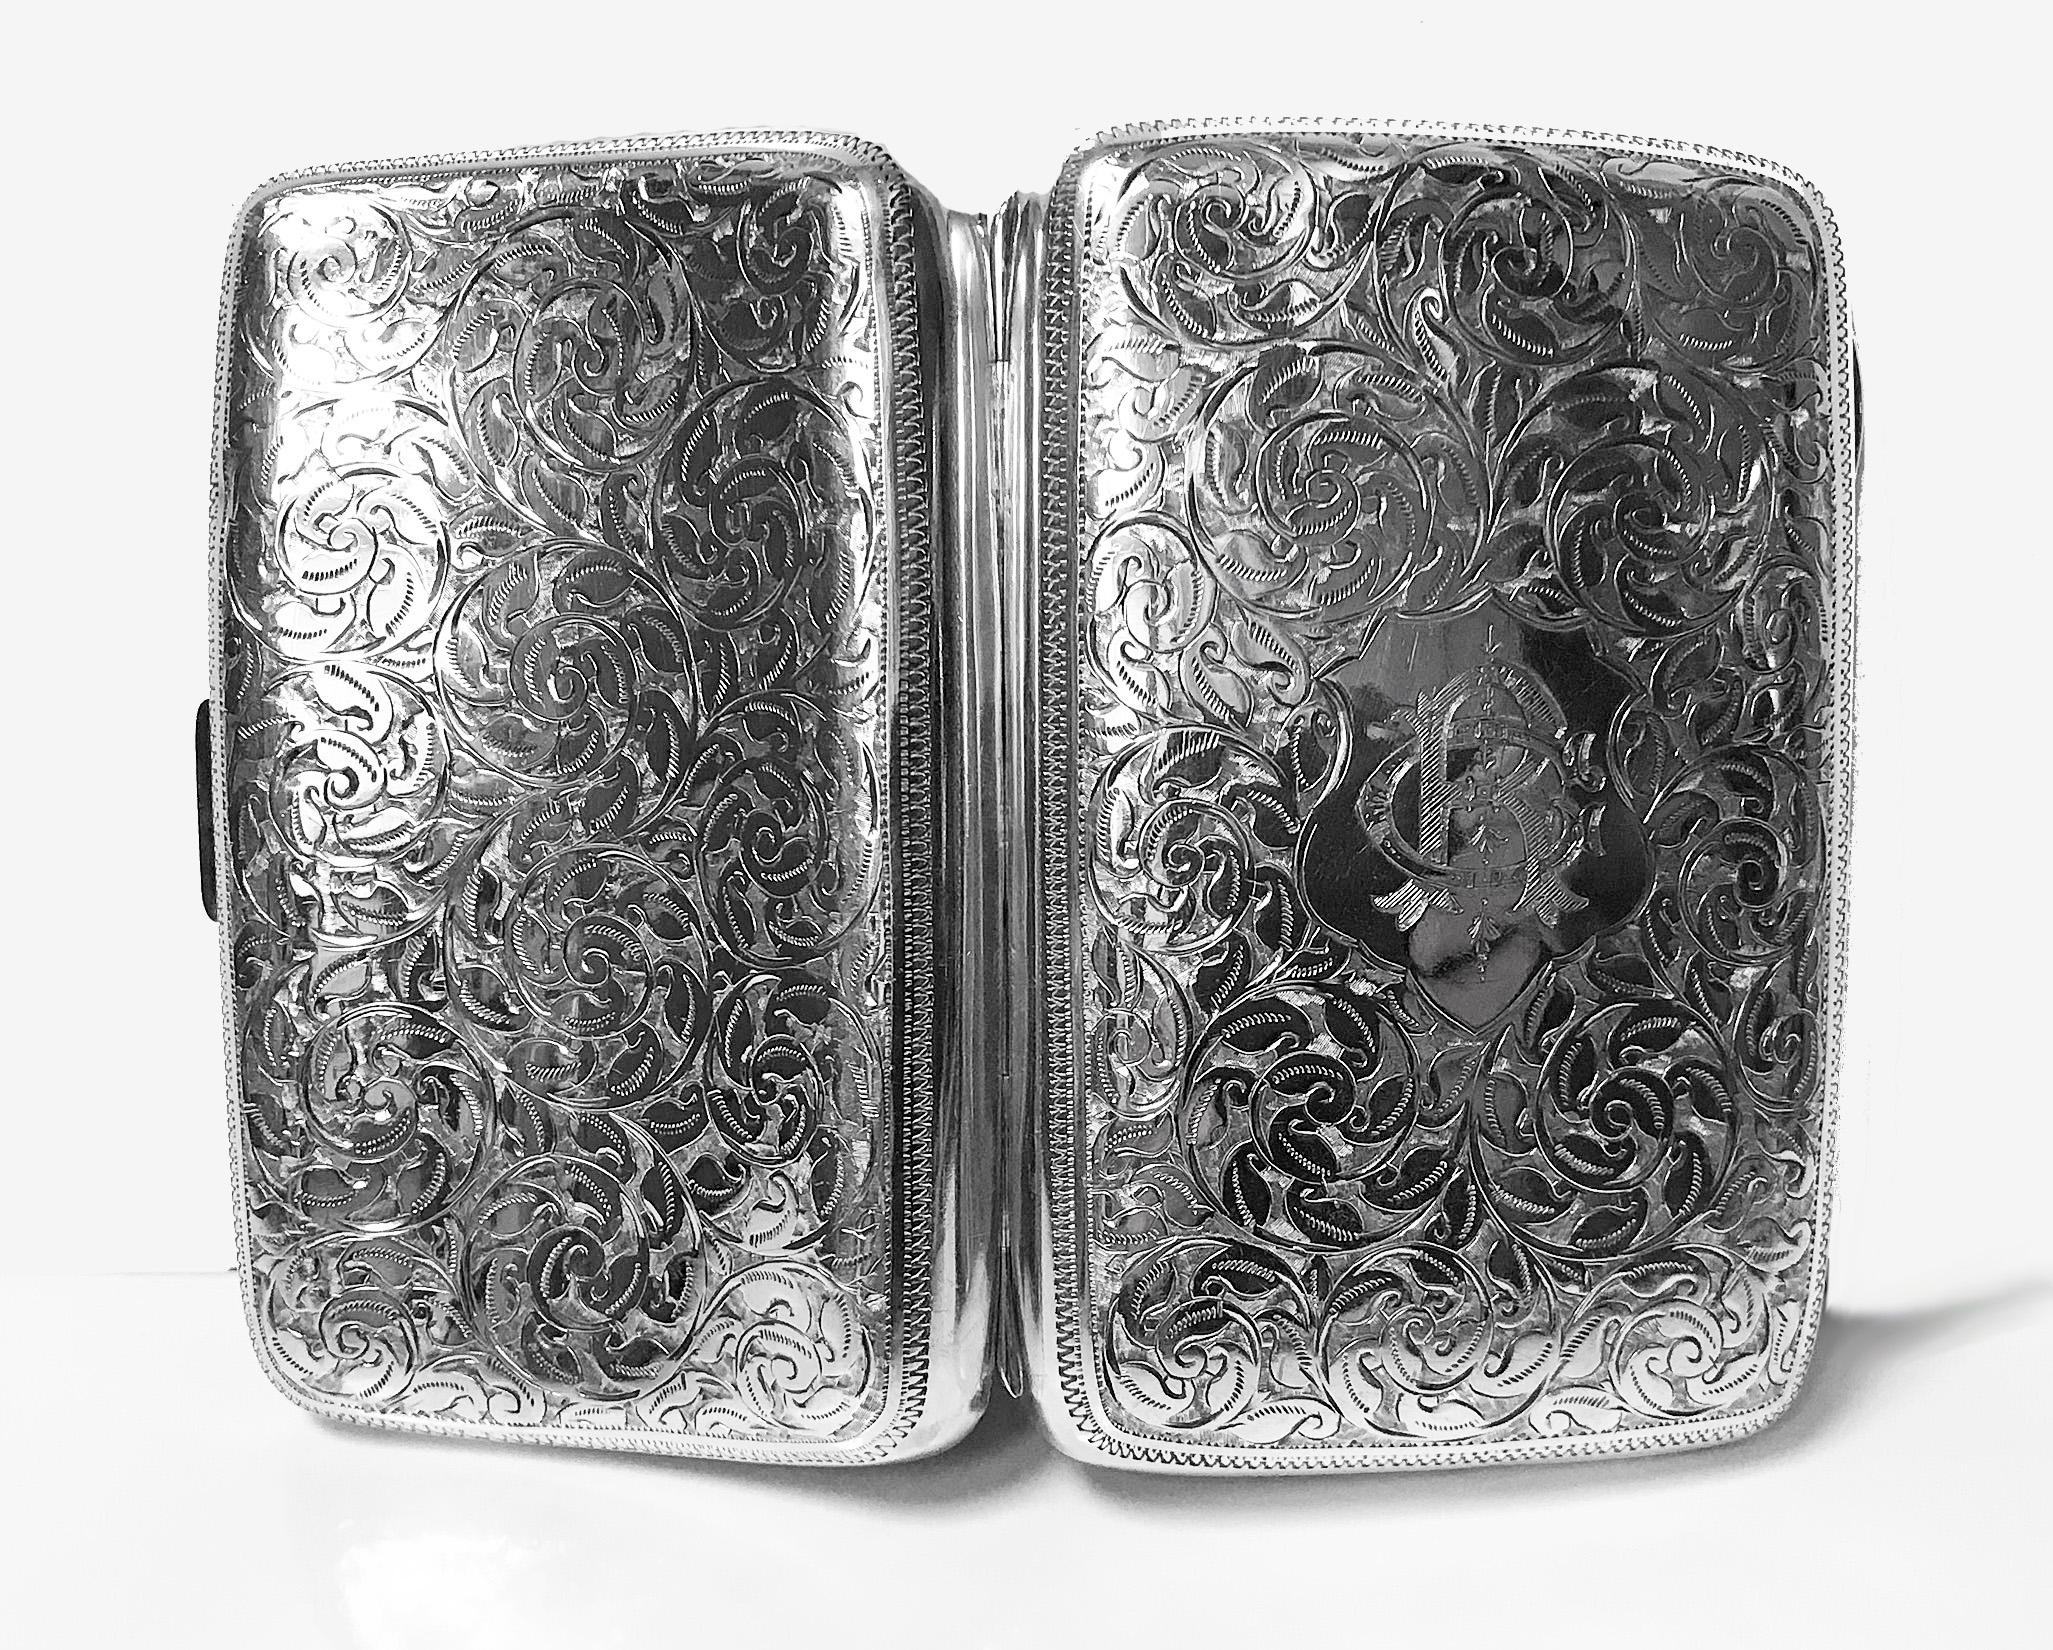 sterling silver case